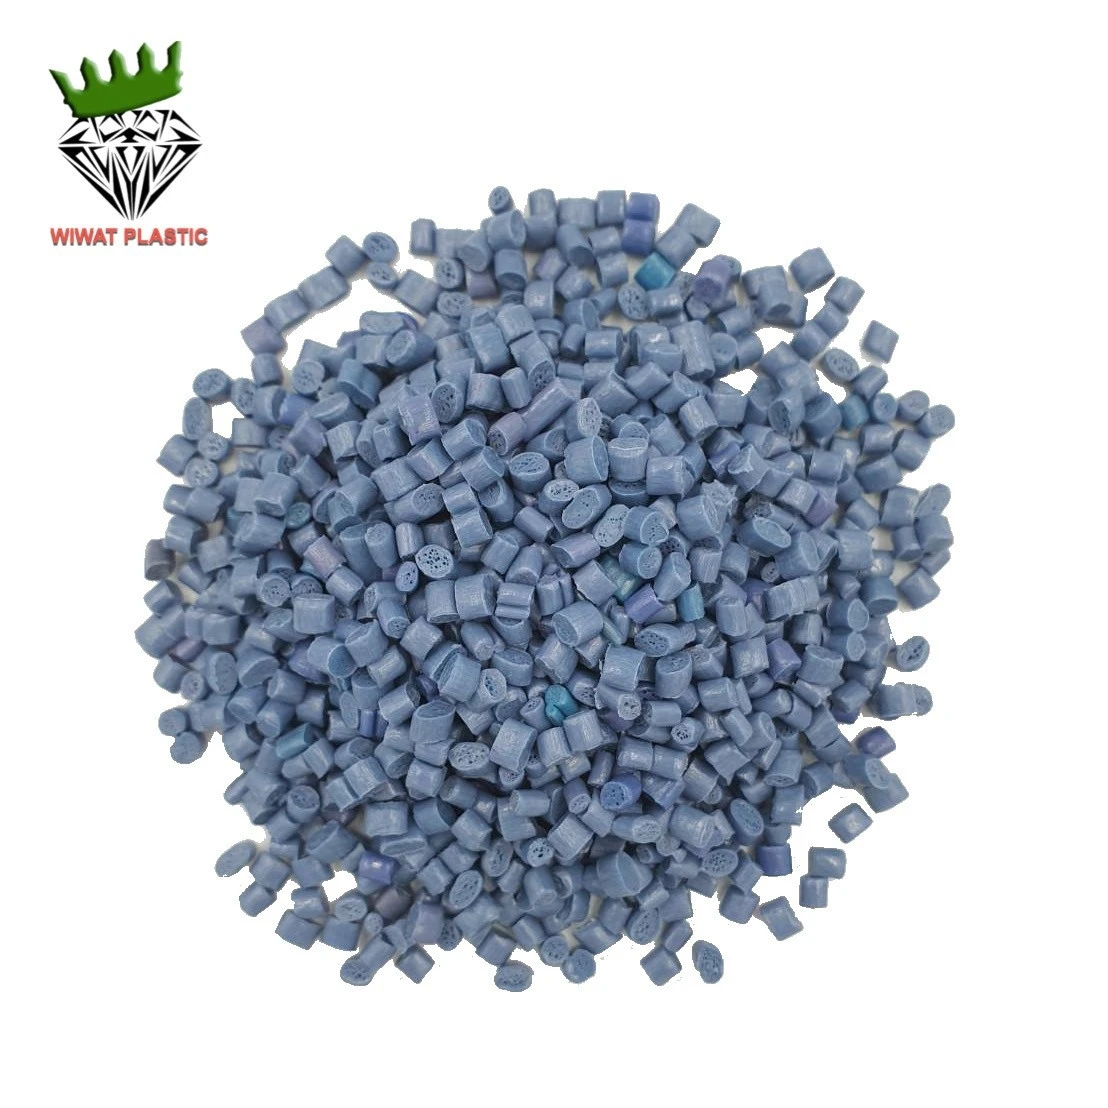 LDPE/LLDPE granules Film Grade mixed colour plastic pellets